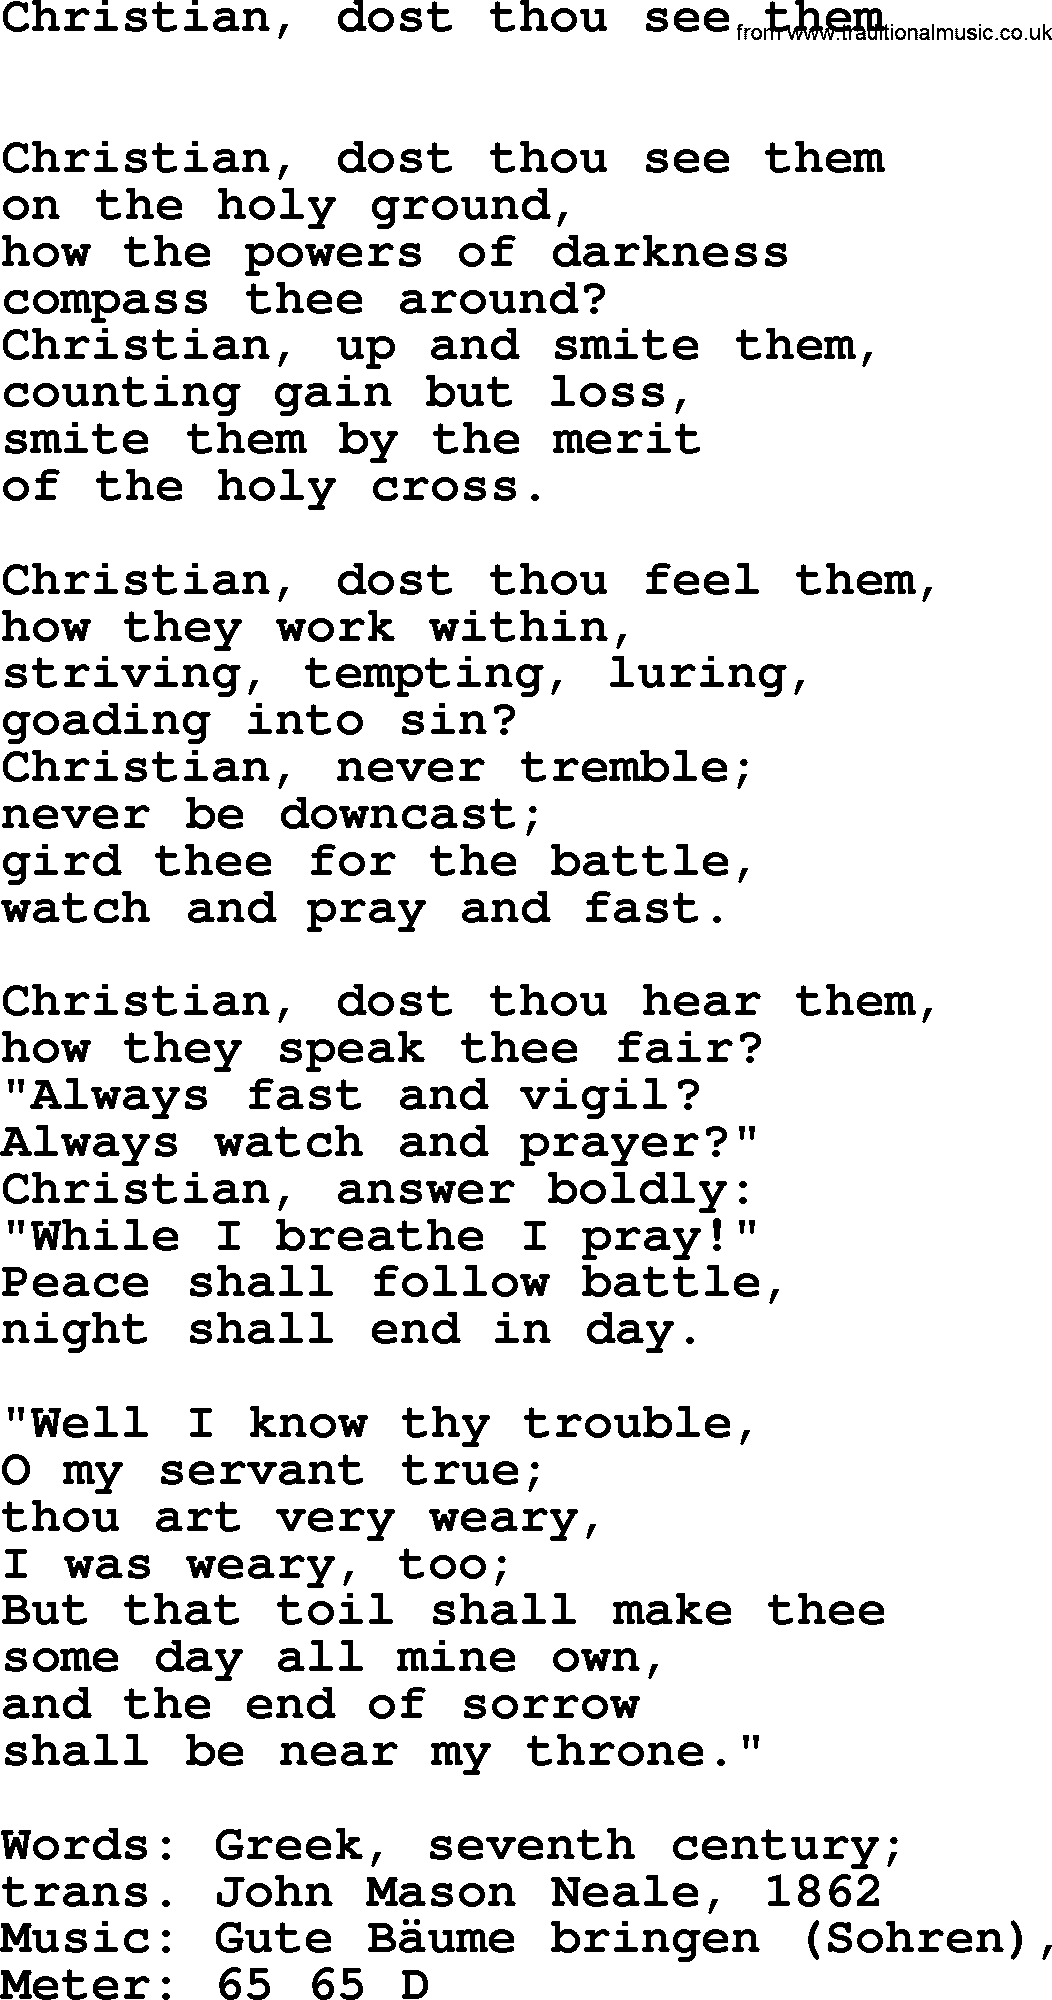 Book of Common Praise Hymn: Christian, Dost Thou See Them.txt lyrics with midi music